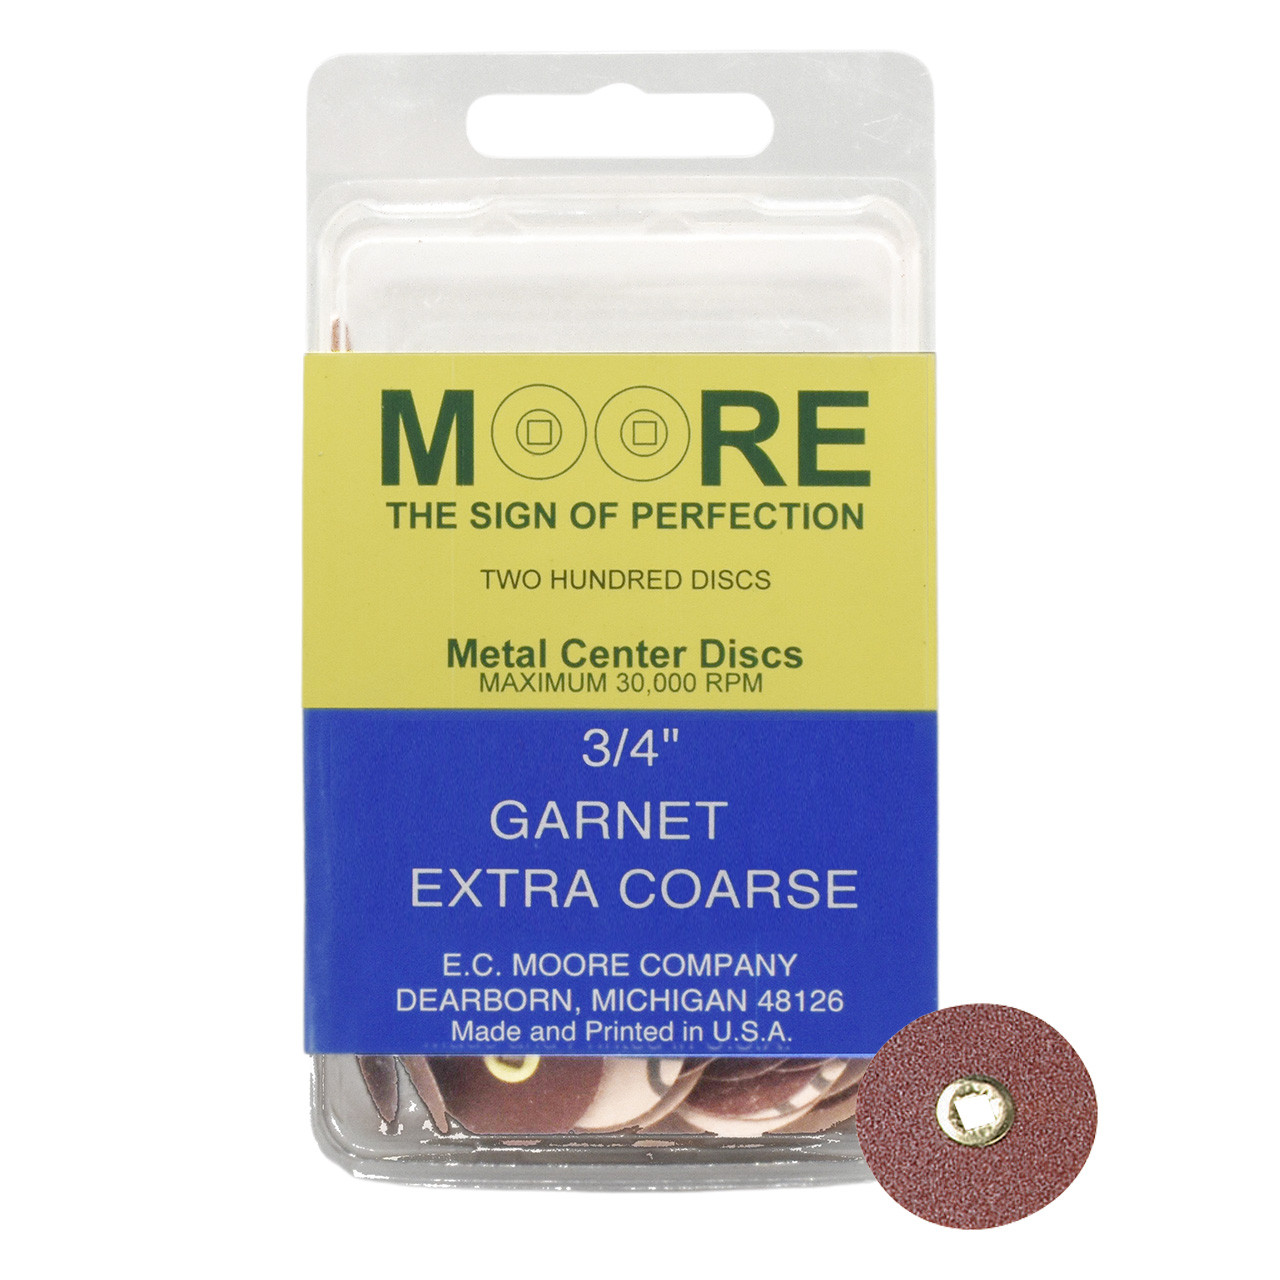 Garnet 3/4" Extra Coarse Moore Snap-On Discs (200)